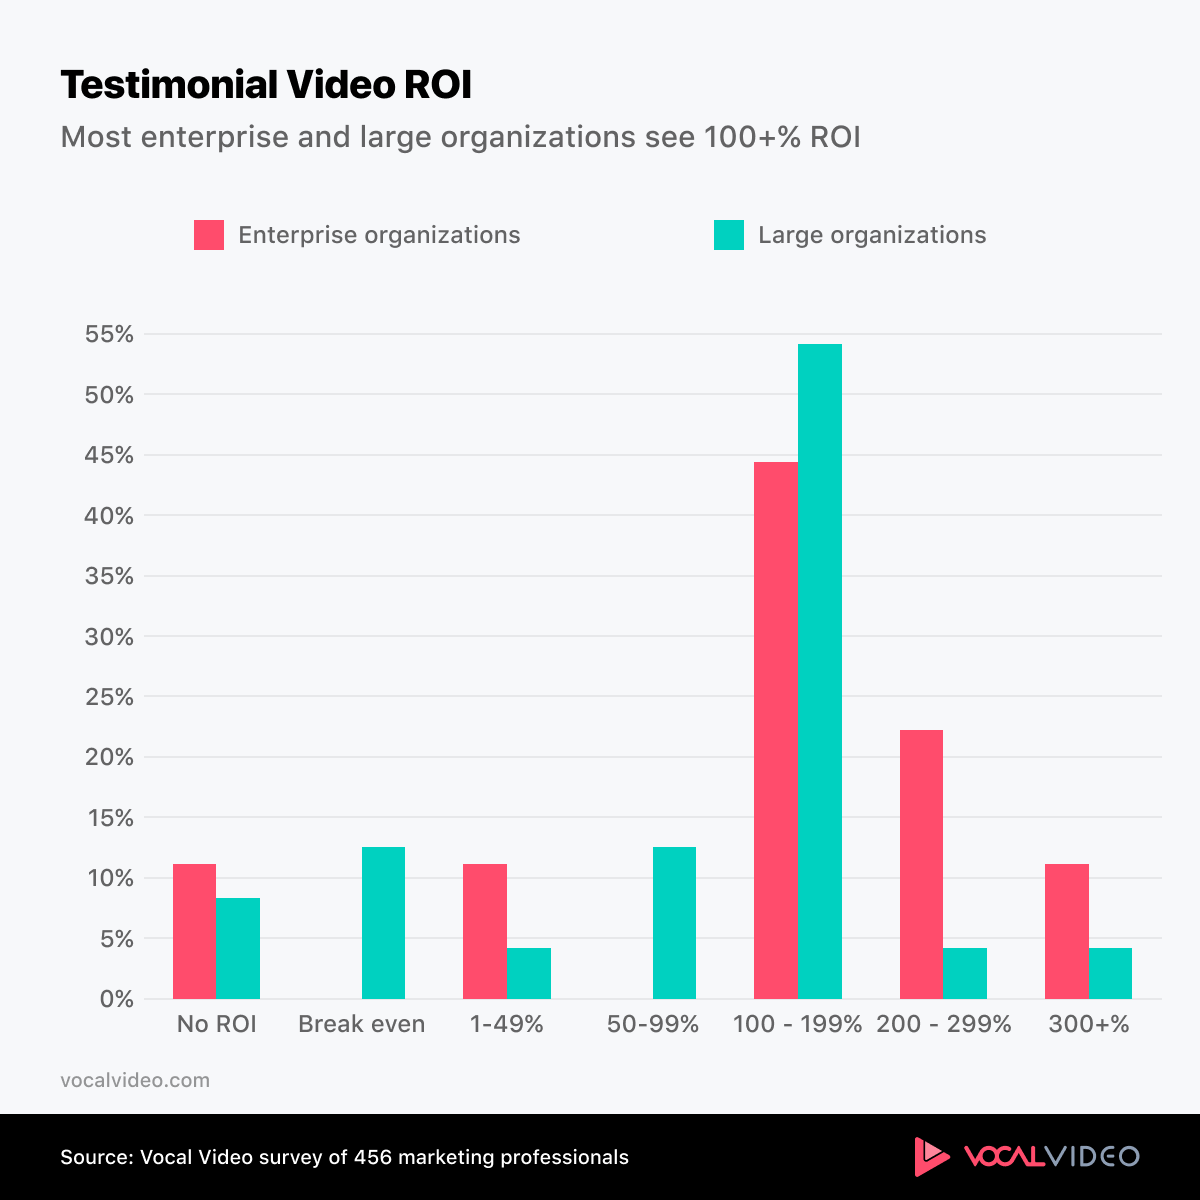 Testimonial video ROI survey results